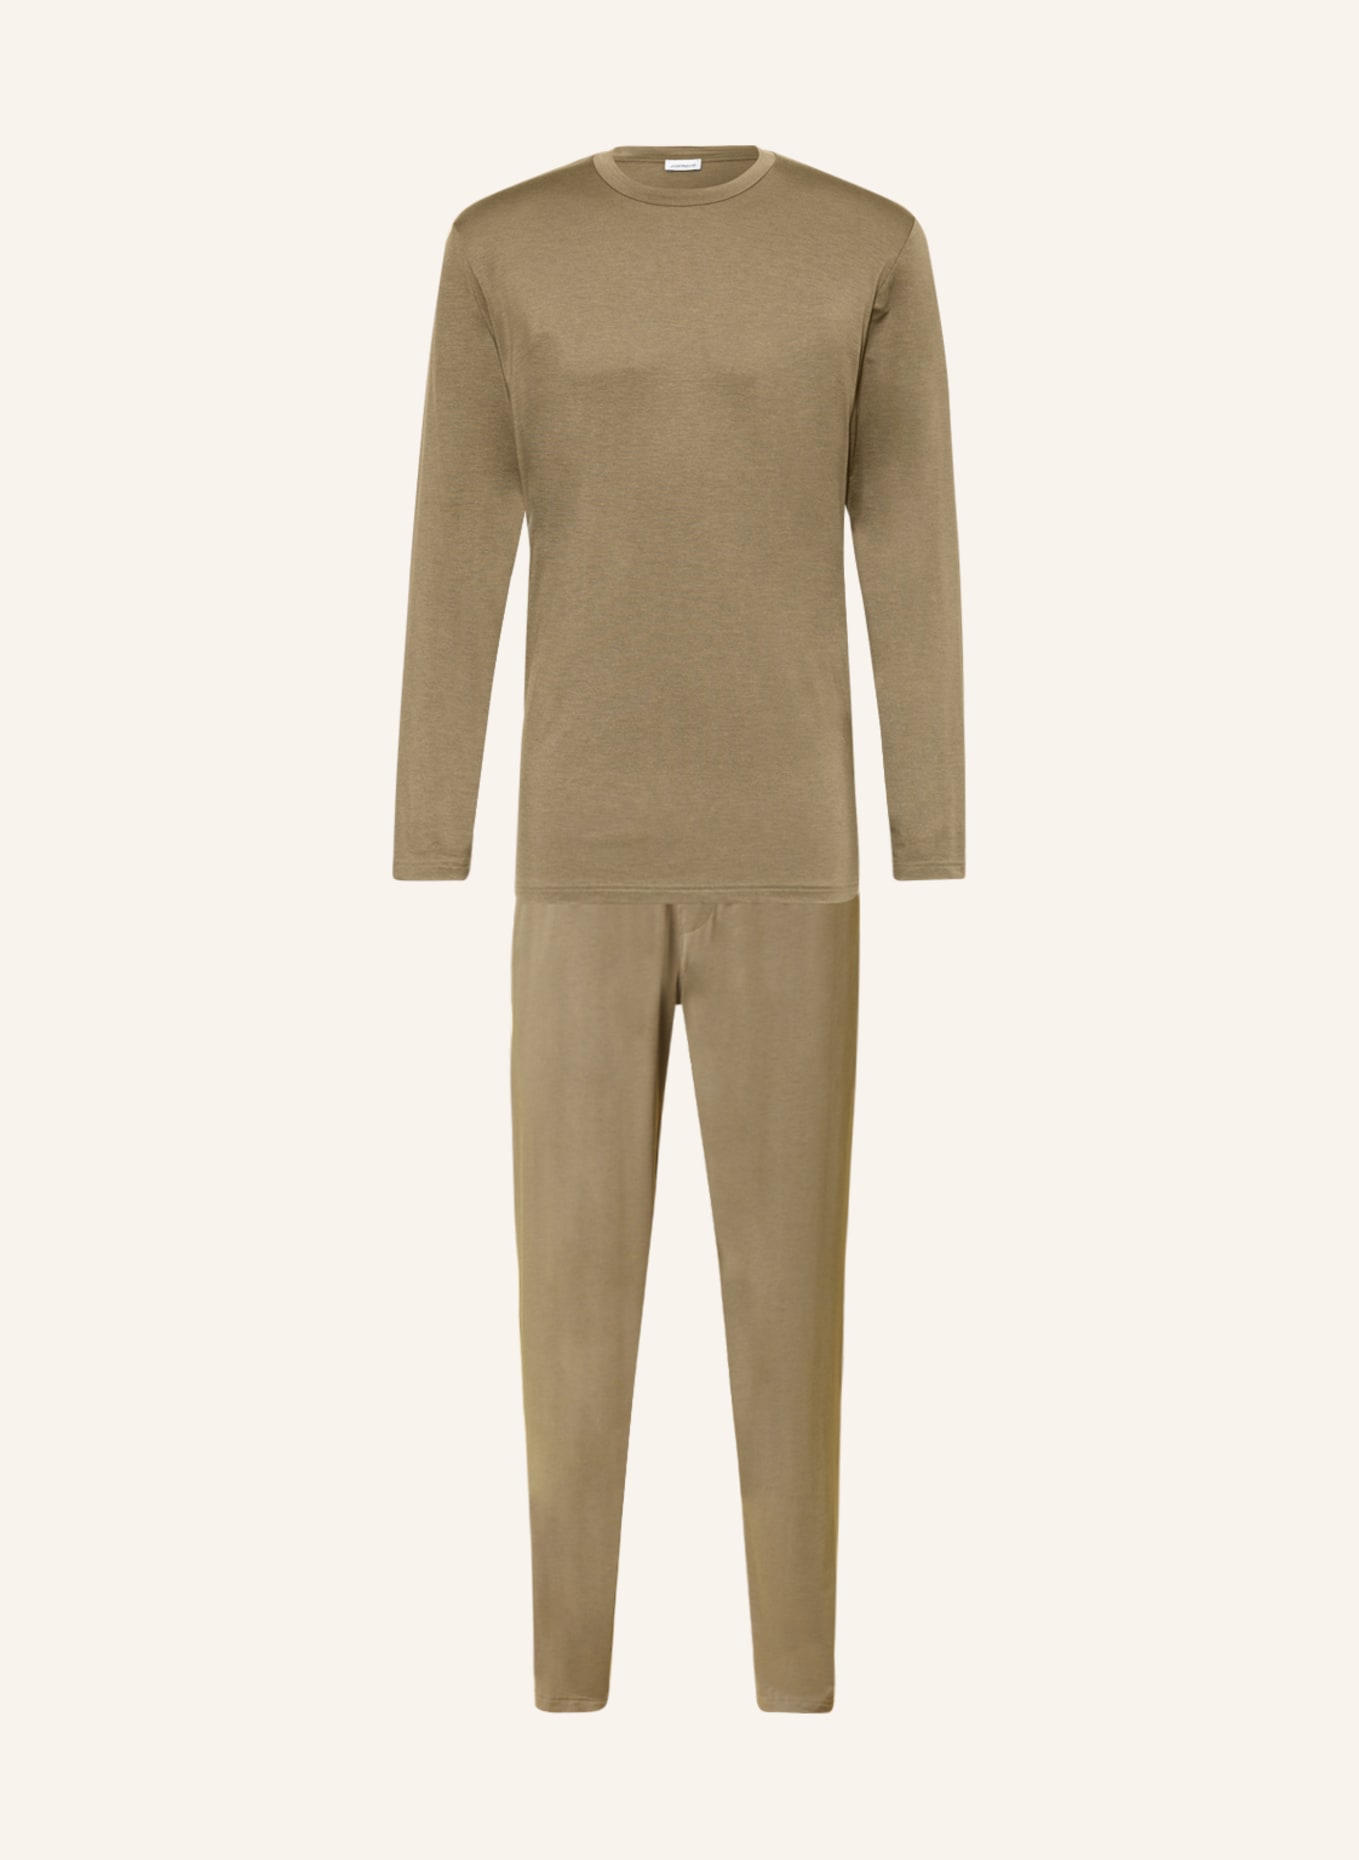 zimmerli Schlafanzug COZY COMFORT, Farbe: KHAKI (Bild 1)